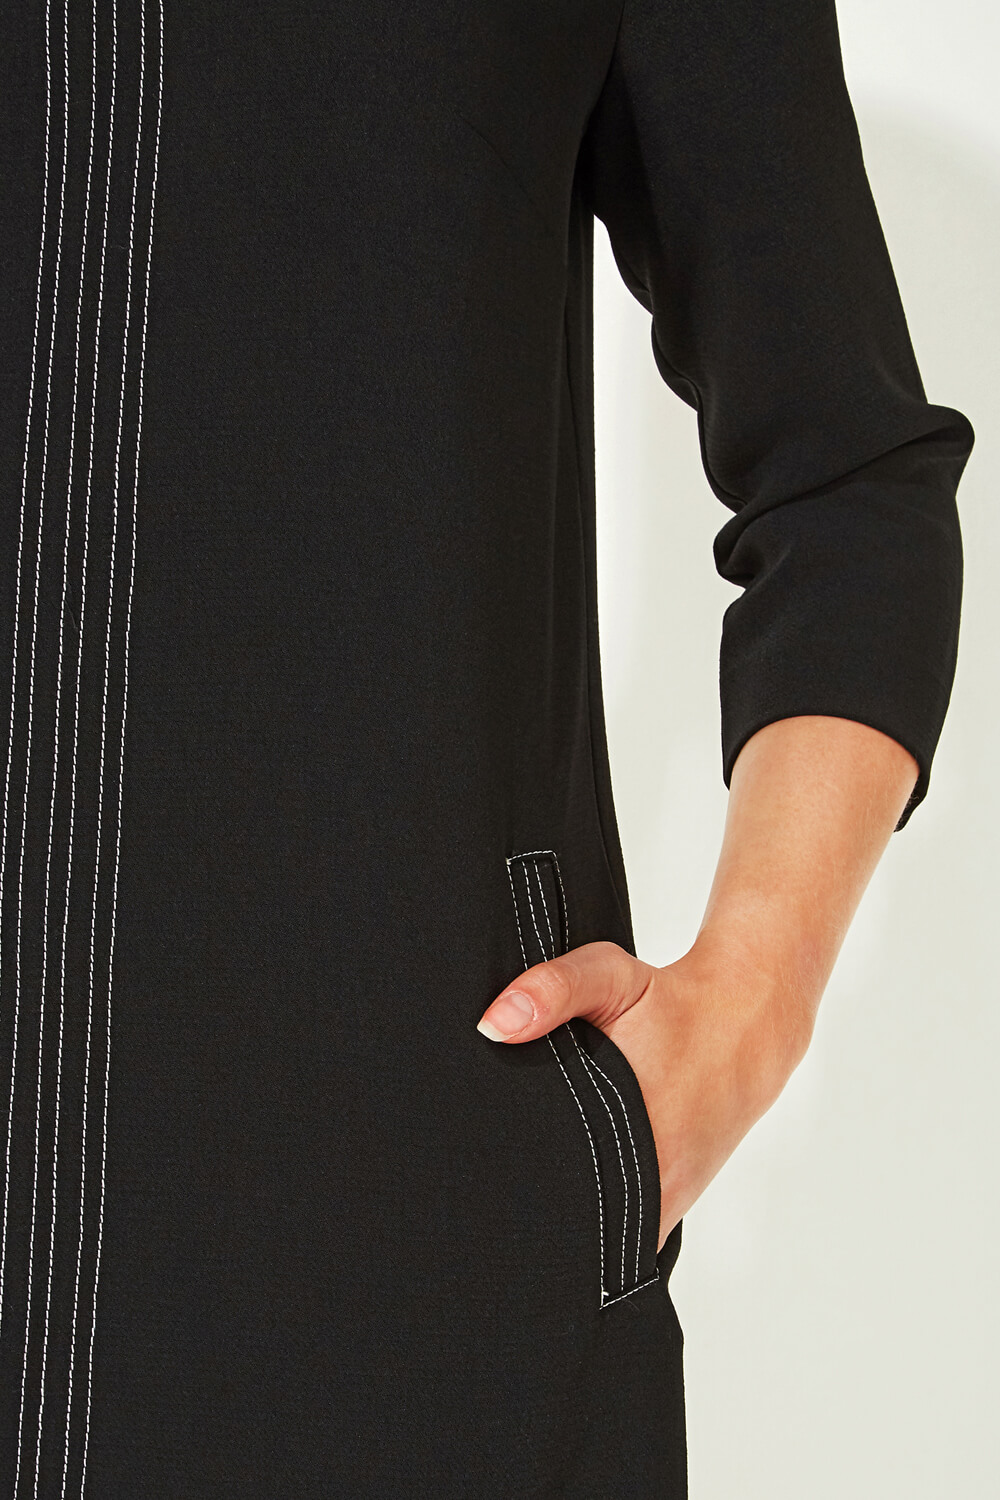 Black 3/4 Sleeve Top Stitch Shift Dress, Image 4 of 5